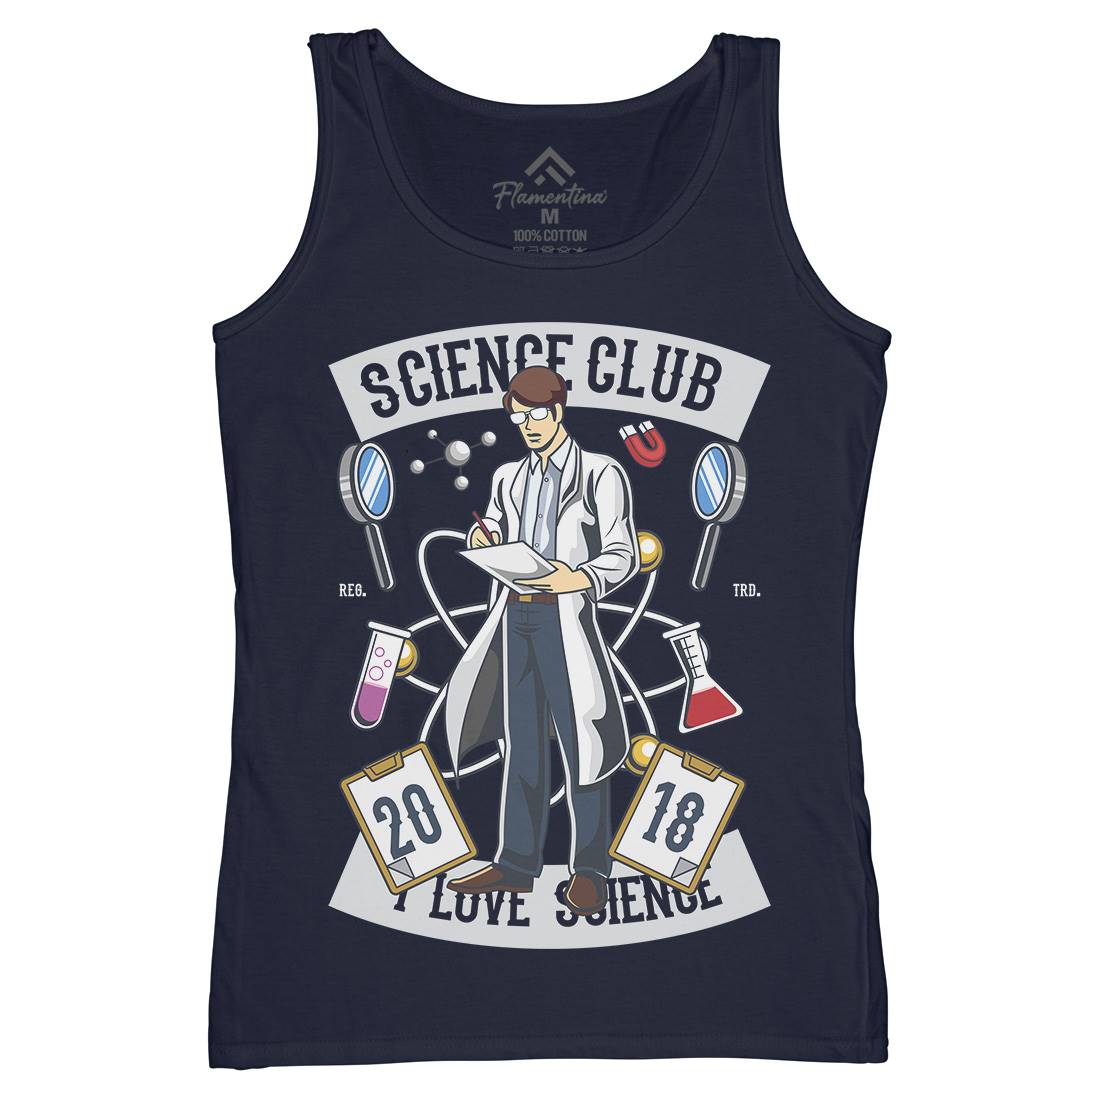 Club I Love Womens Organic Tank Top Vest Science C434